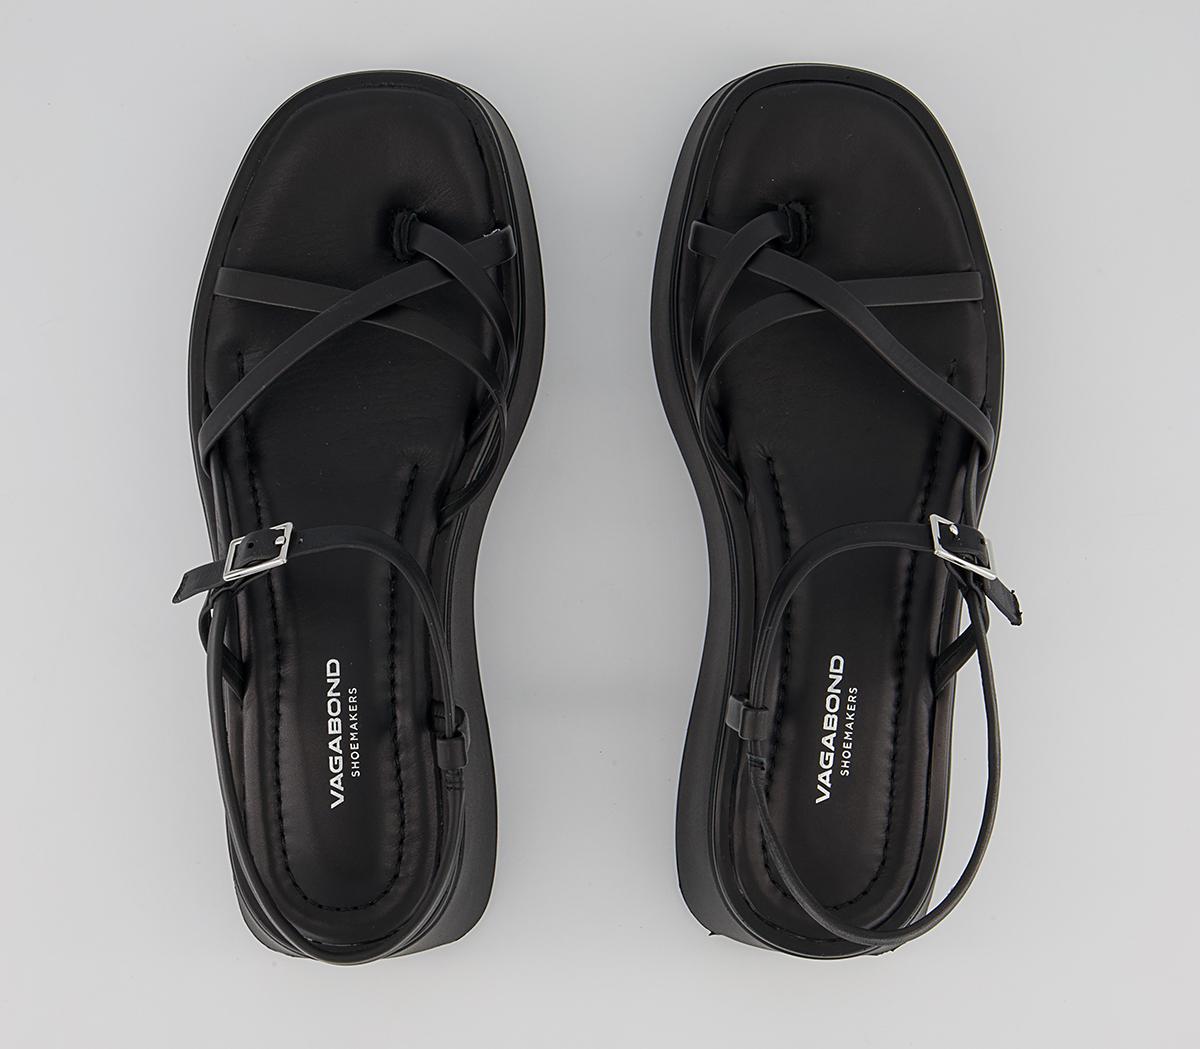 Vagabond Shoemakers Courtney Strap Flatform Black - Women’s Sandals